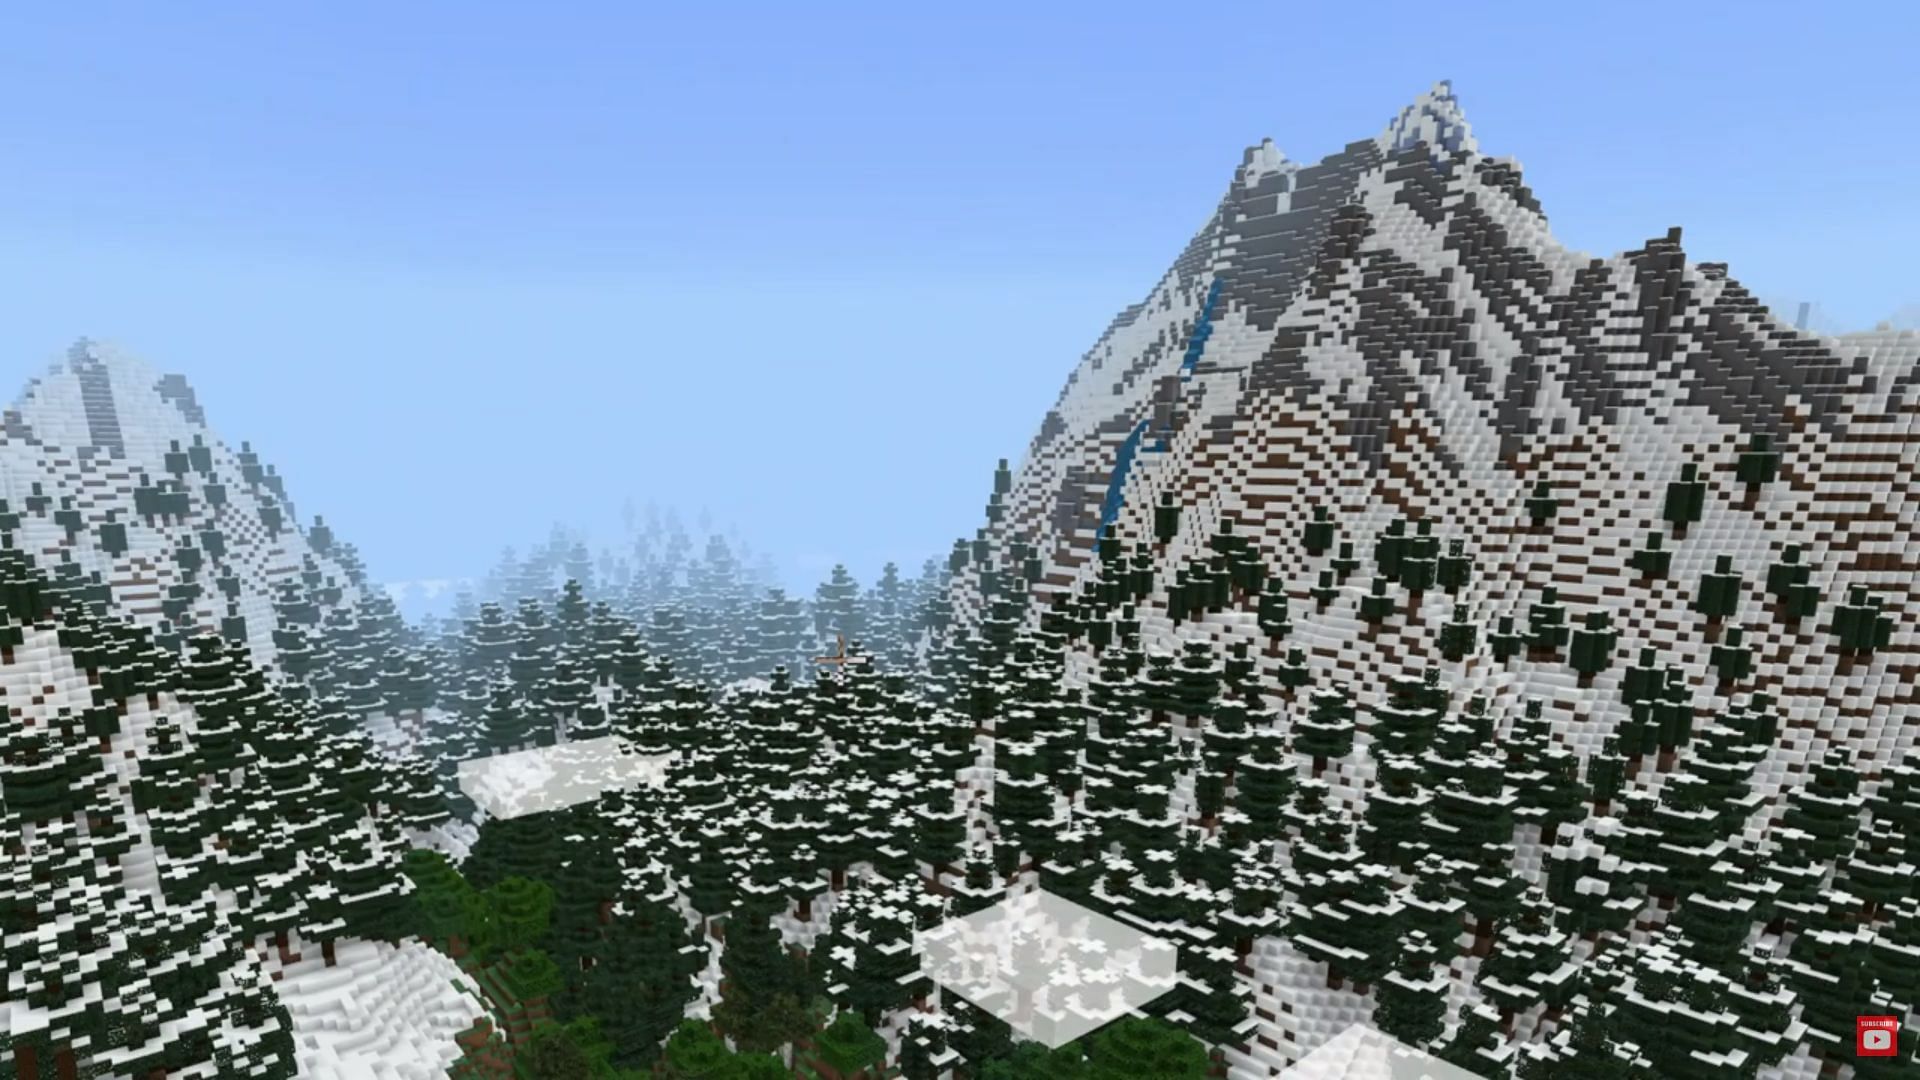 Mountain generation on Minecraft 1.18 update (Image via Reddit)